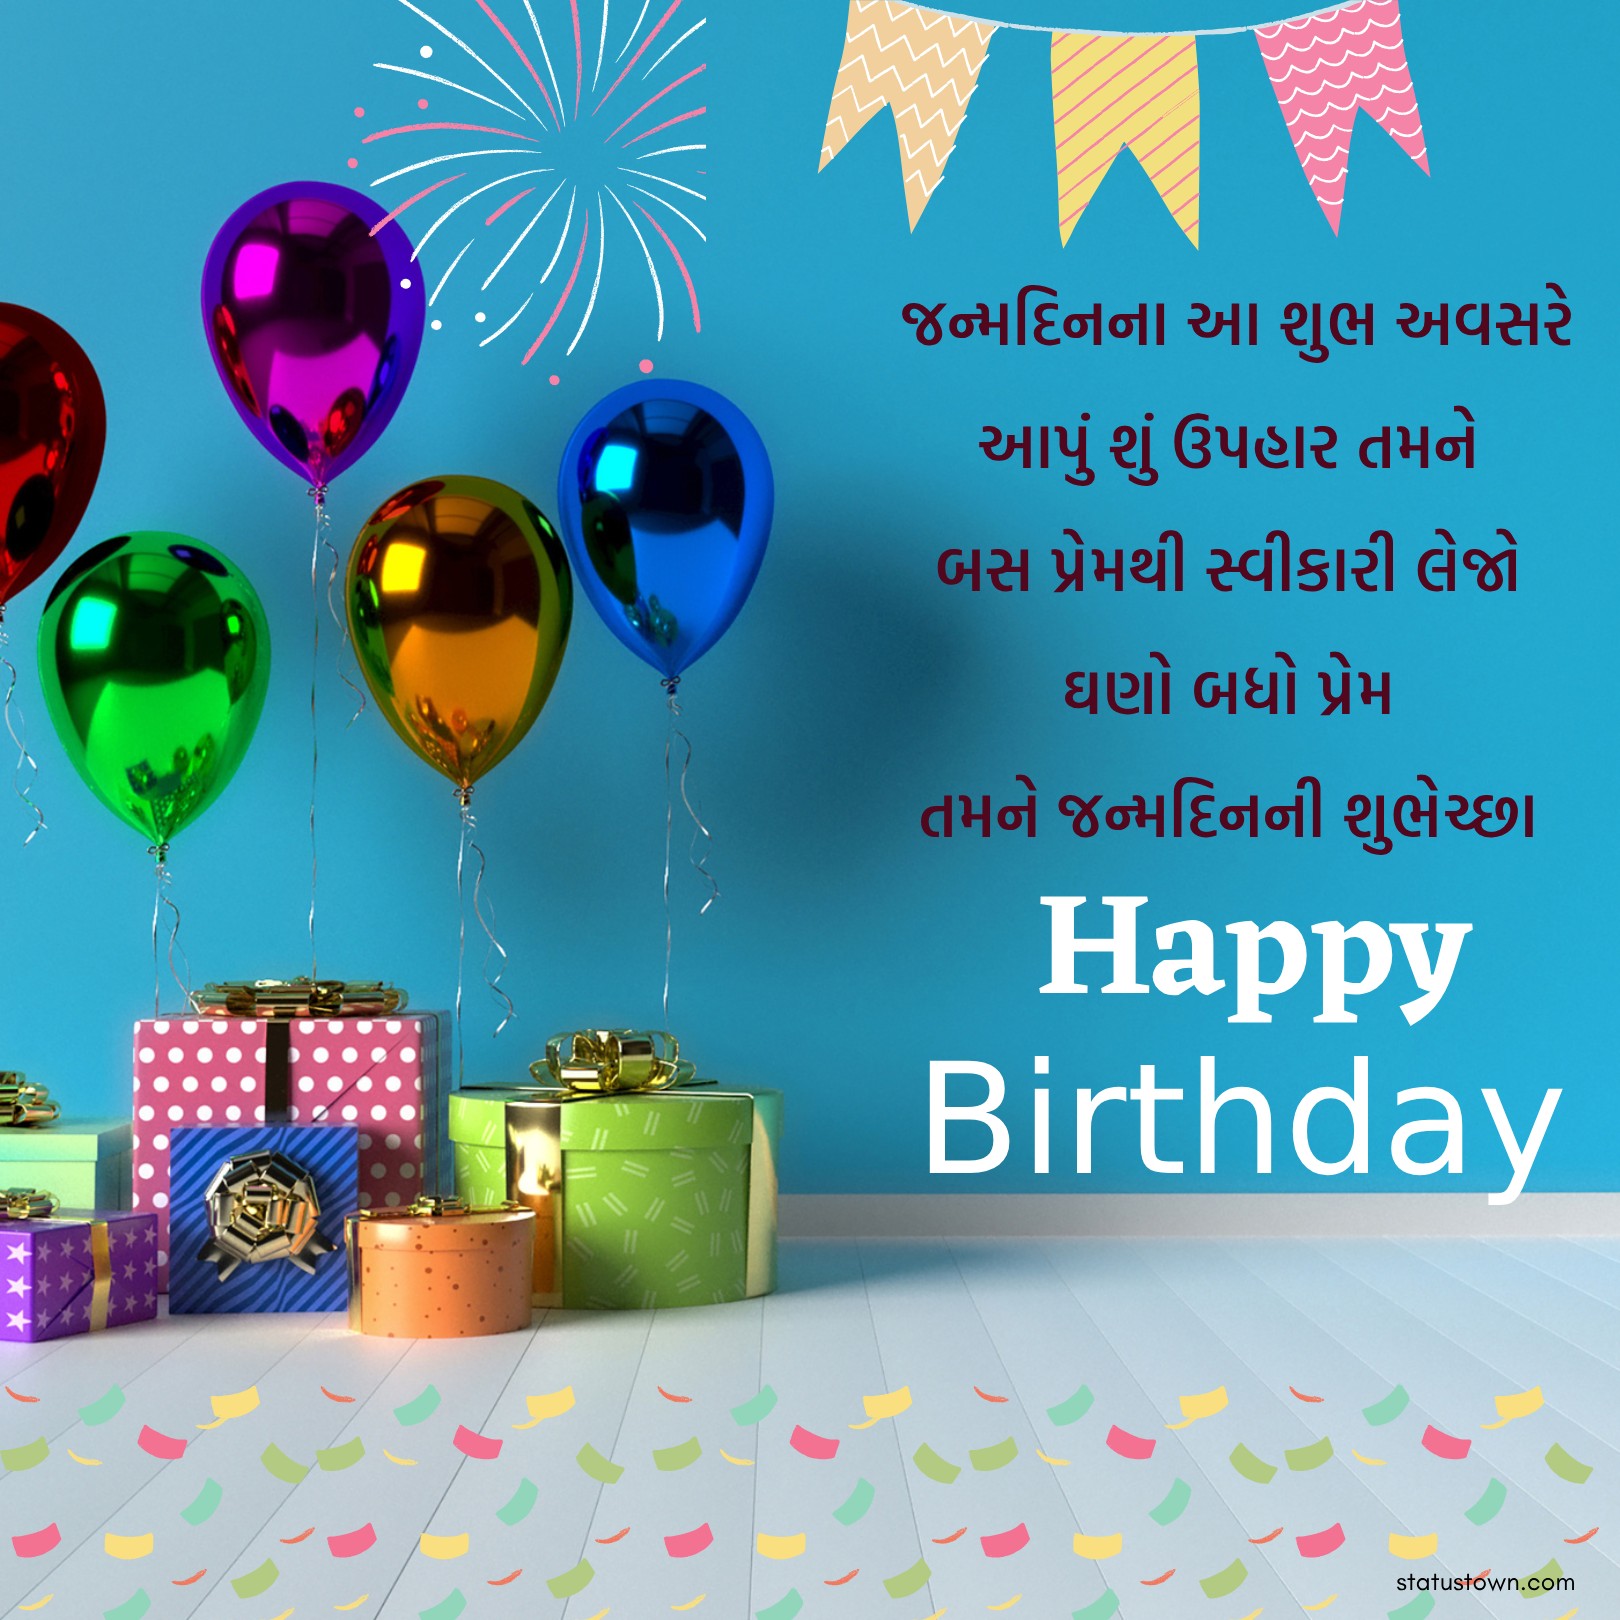 Short birthday wishes in gujarati